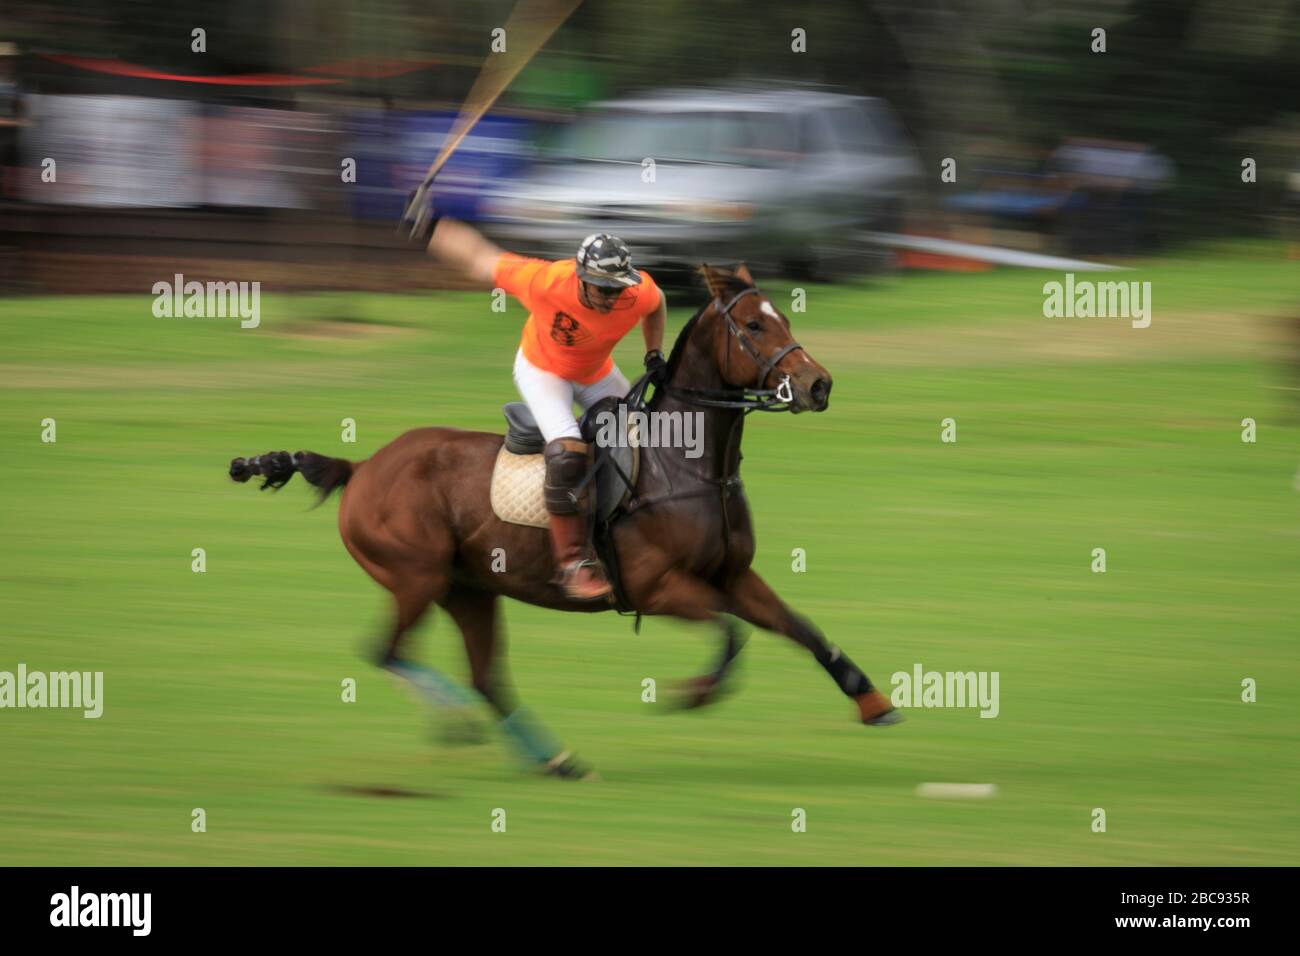 Polo player winds up to take shot during match in Waimea (Kamuela) Hawaii. Stock Photo